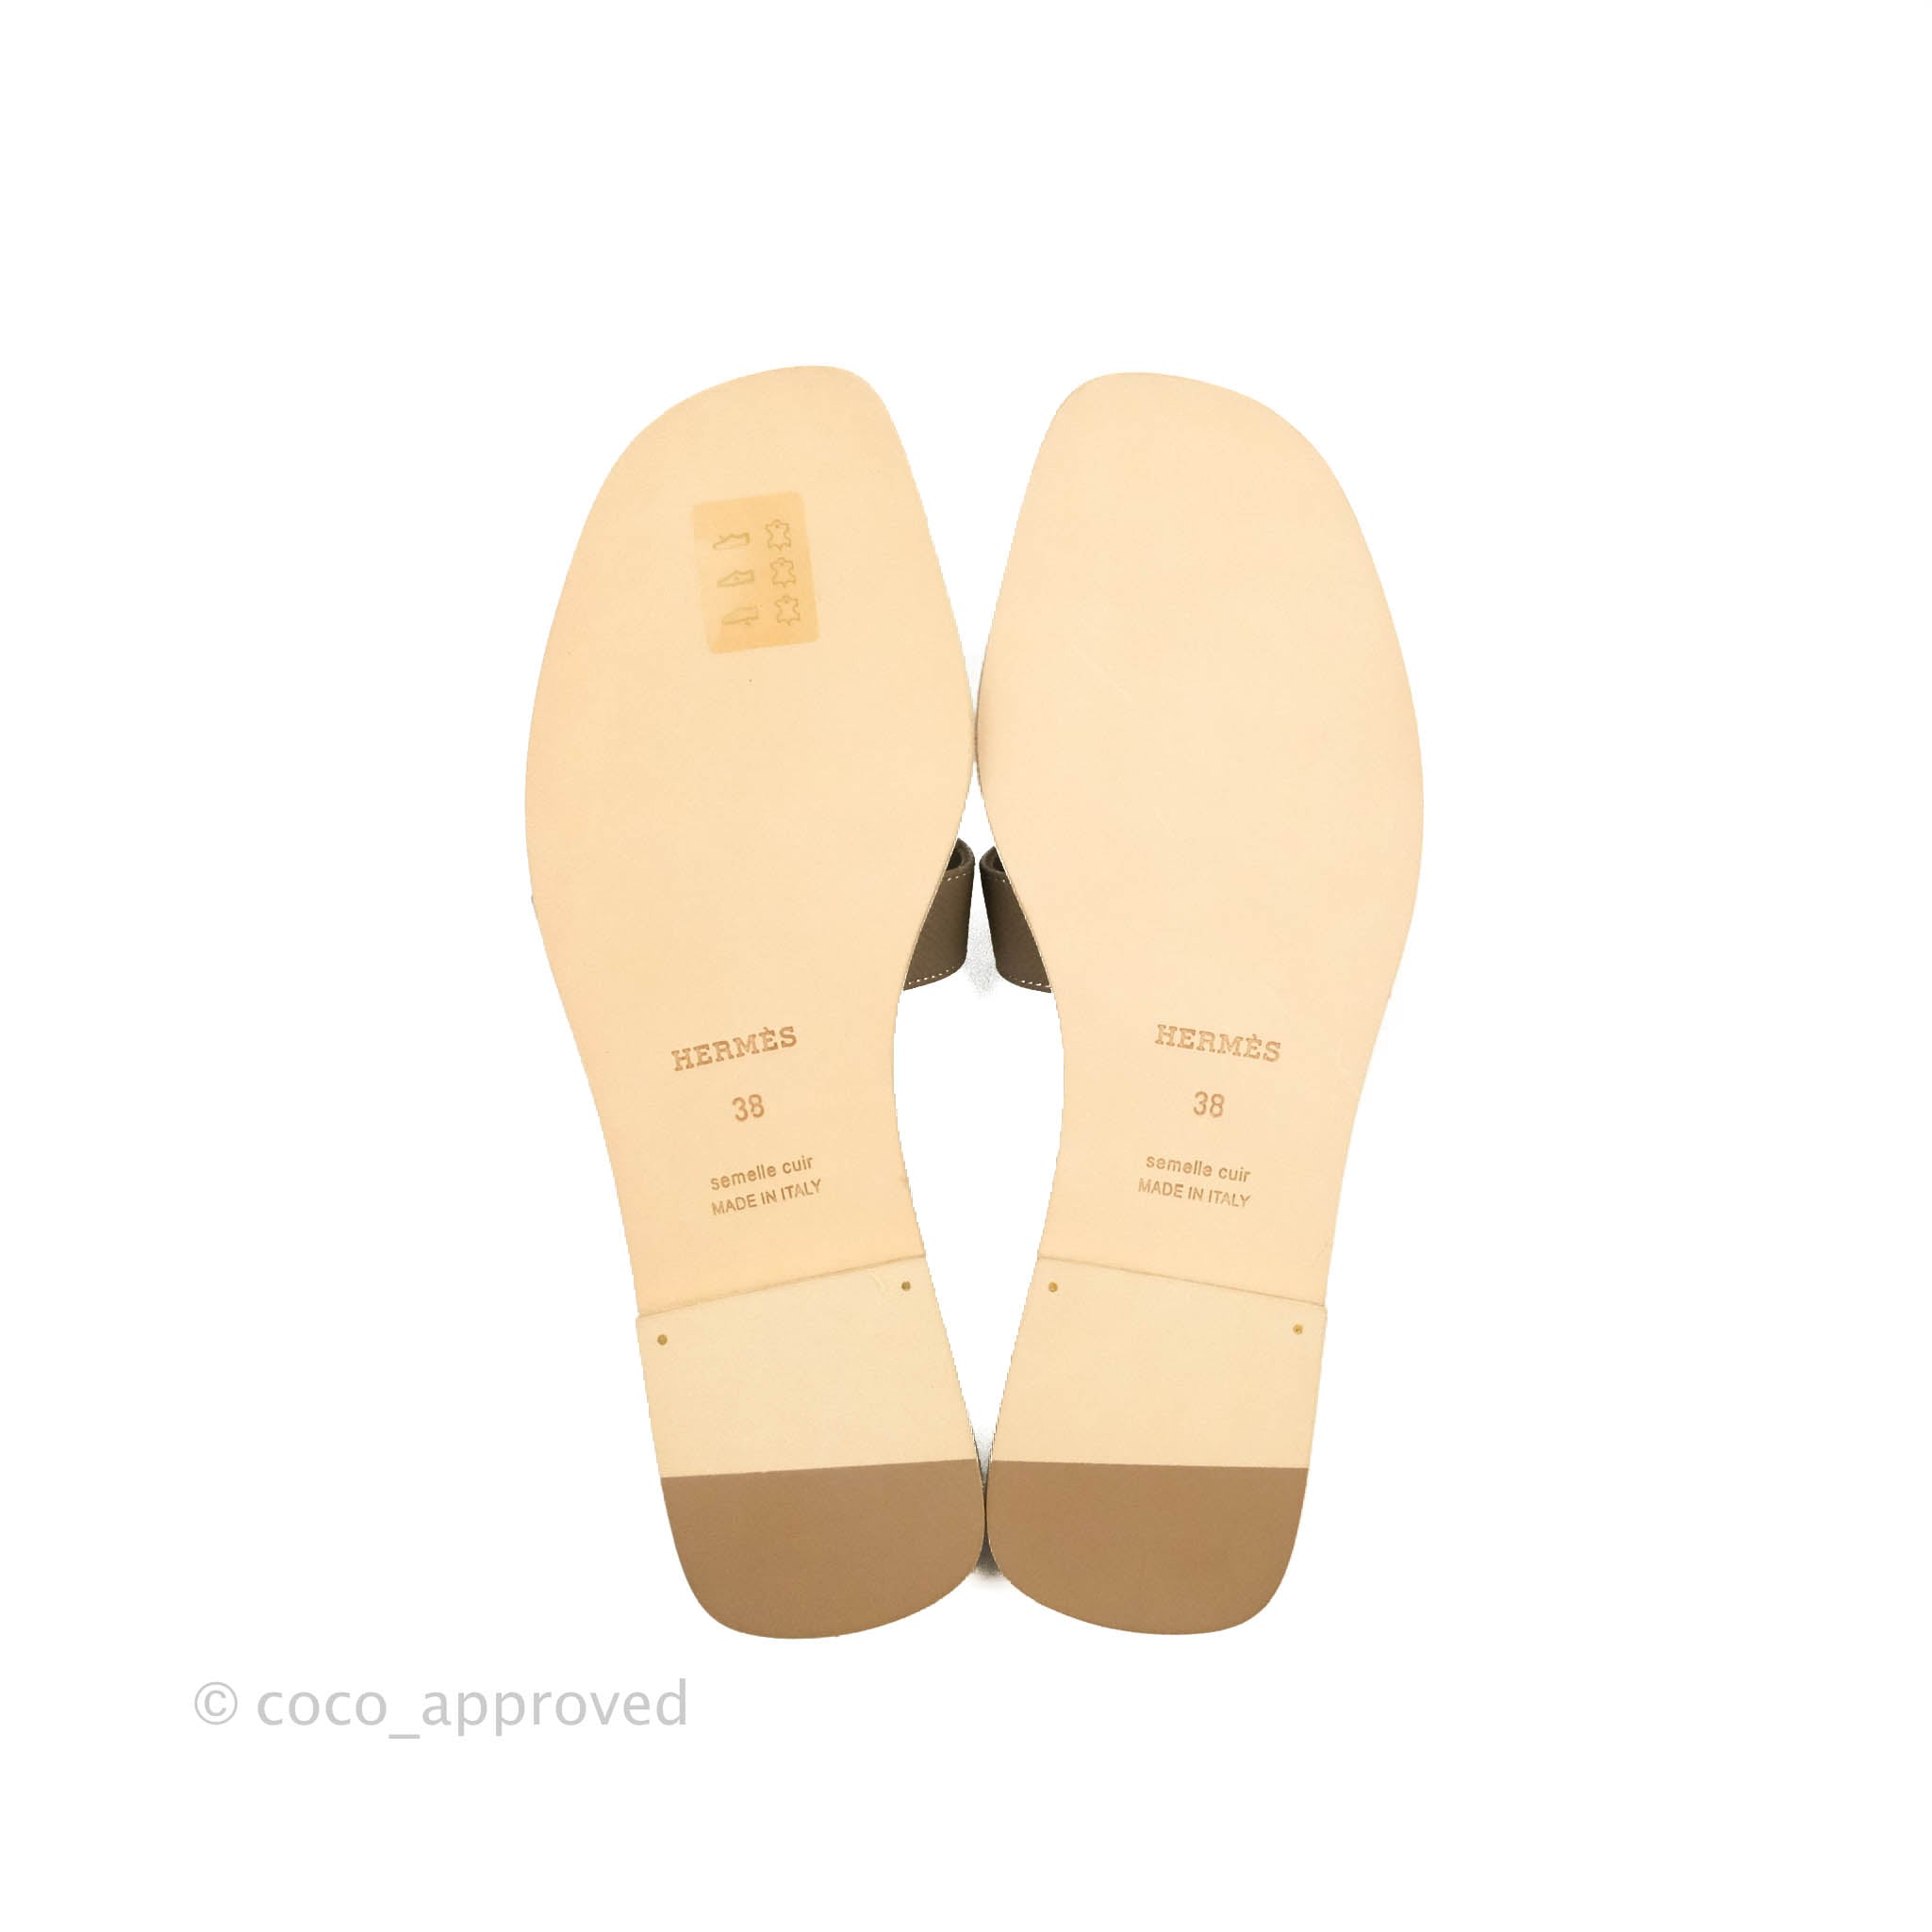 Hermes Oran Sandals Etoupe Epsom Leather Flat Shoes 38